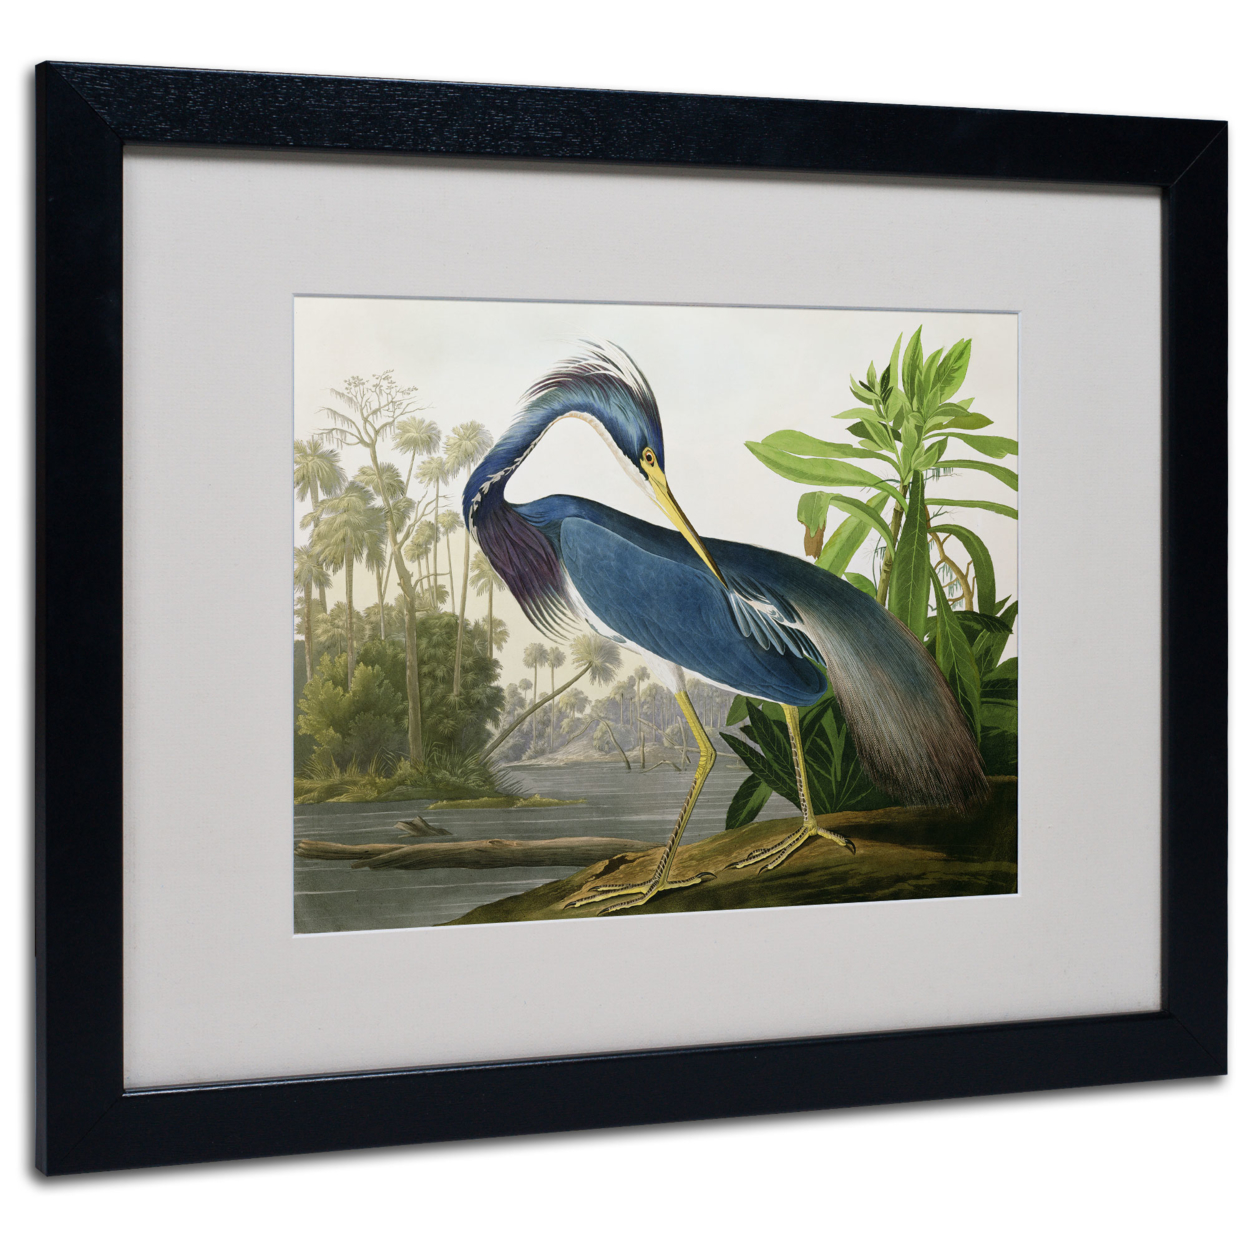 John James Audubon 'Louisiana Heron' Black Wooden Framed Art 18 X 22 Inches